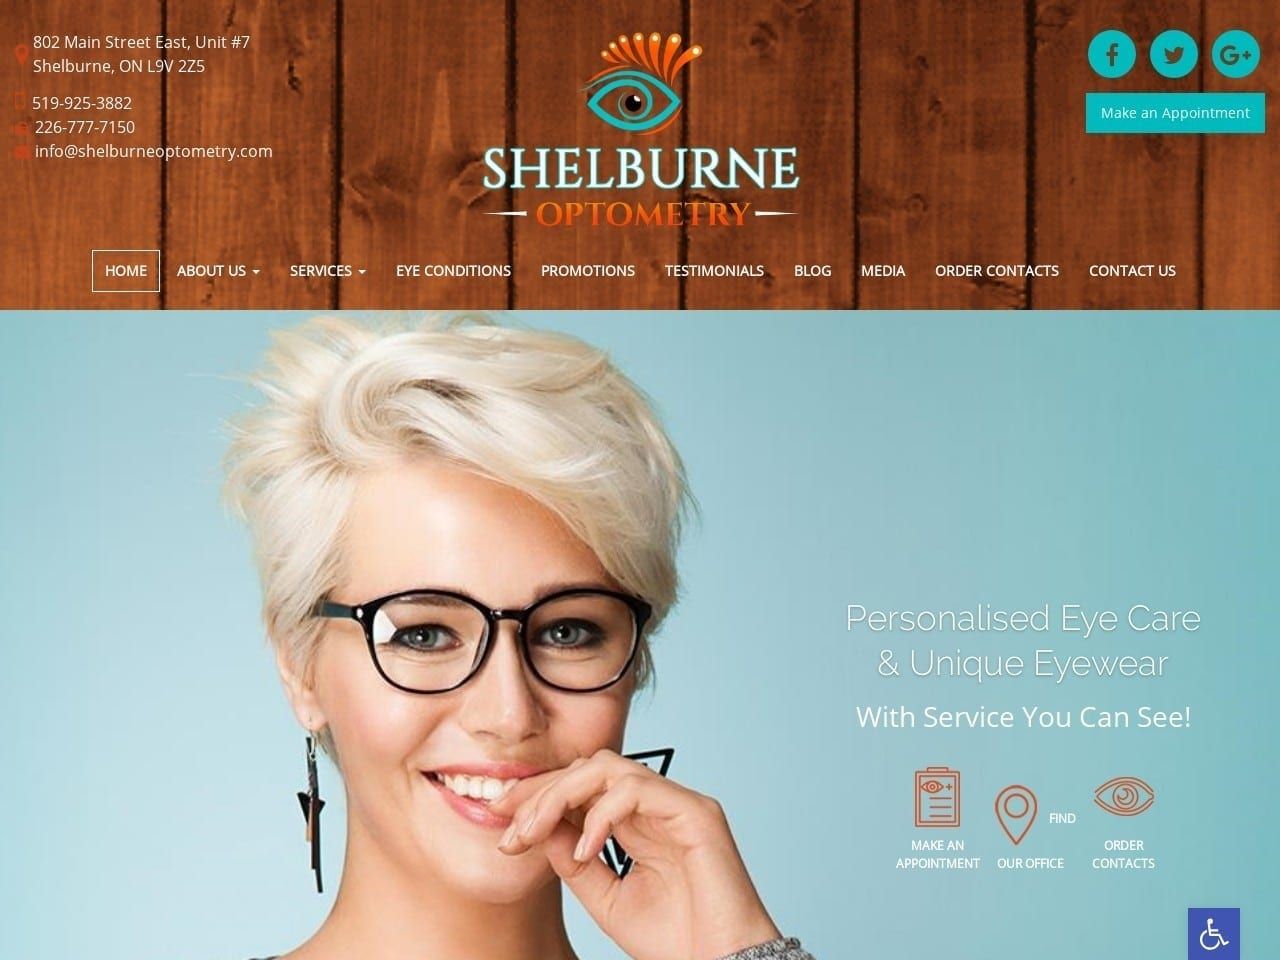 Shelbourne Optometry Website Screenshot From Url Shelburneoptometry.com